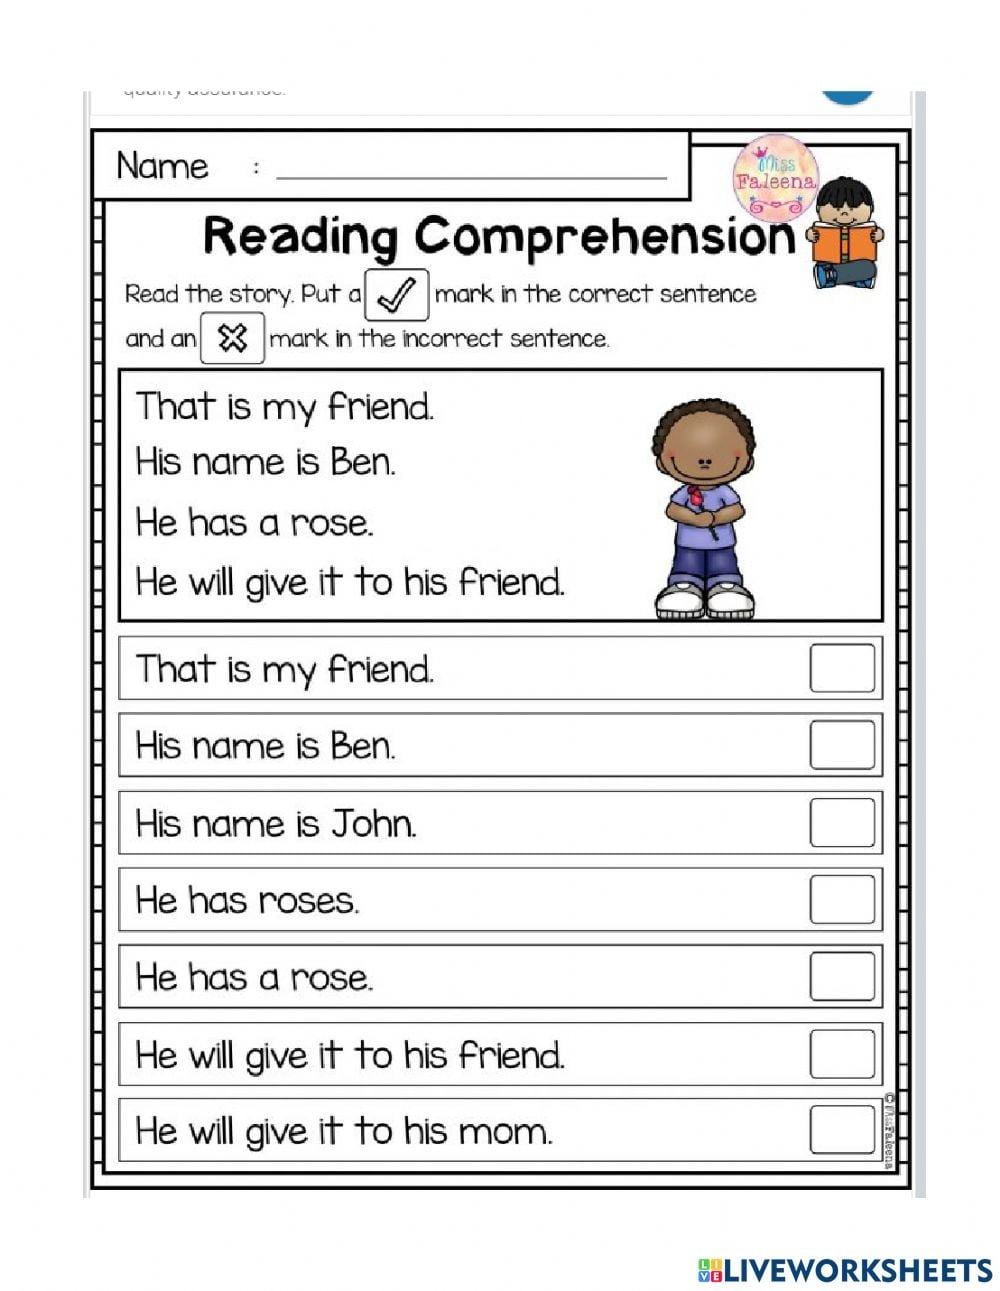 Reading Comprehension Practice Online